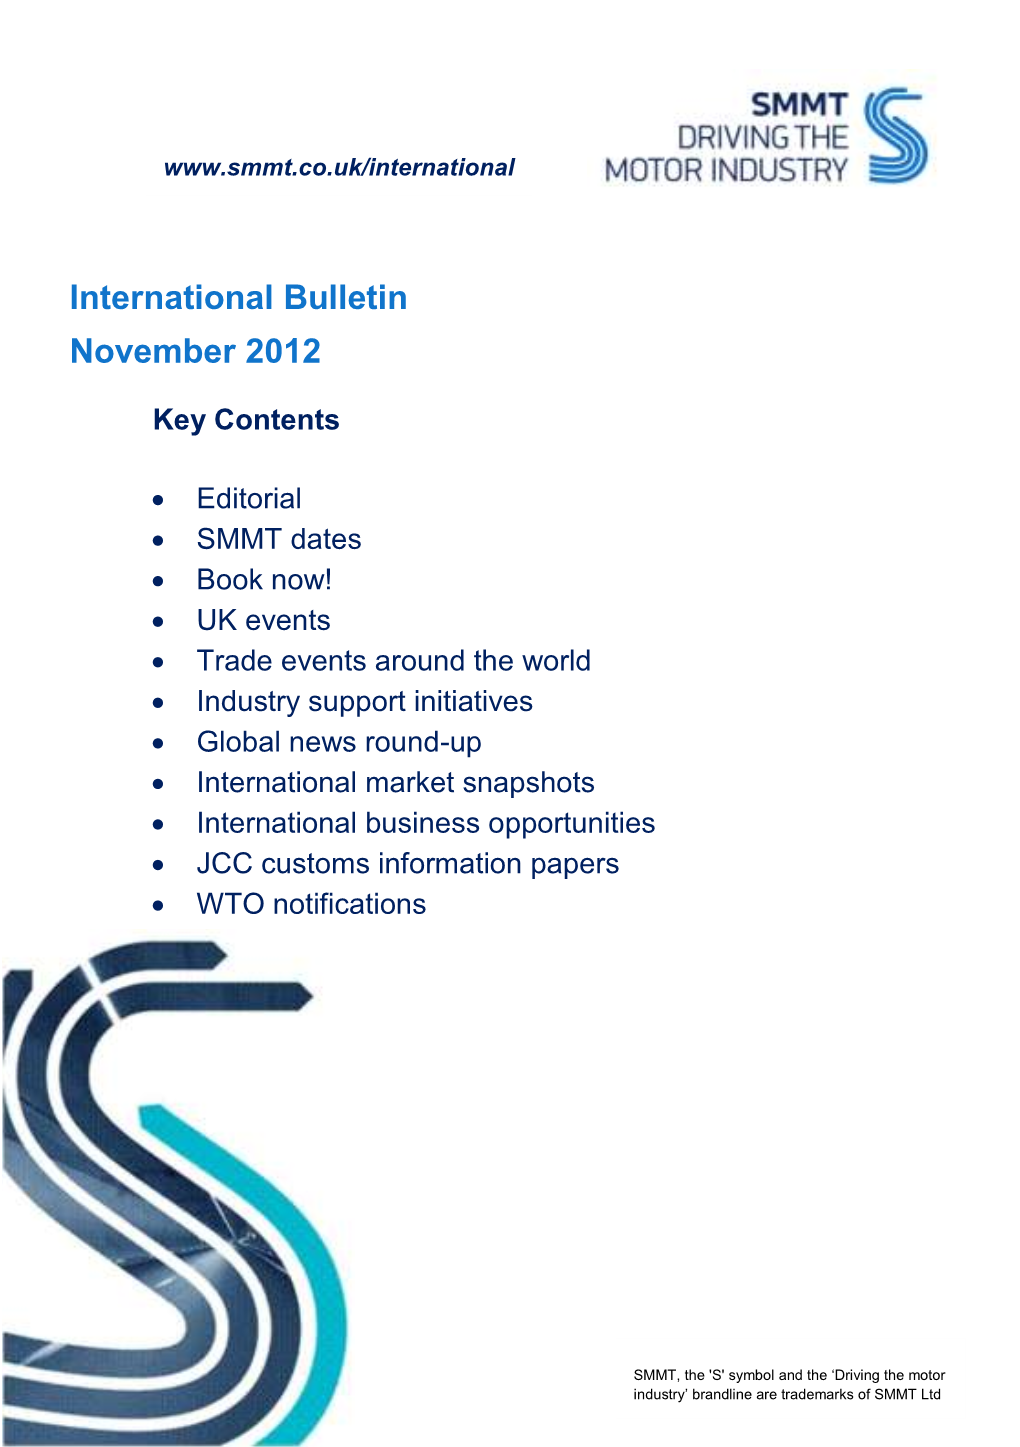 International Bulletin November 2012